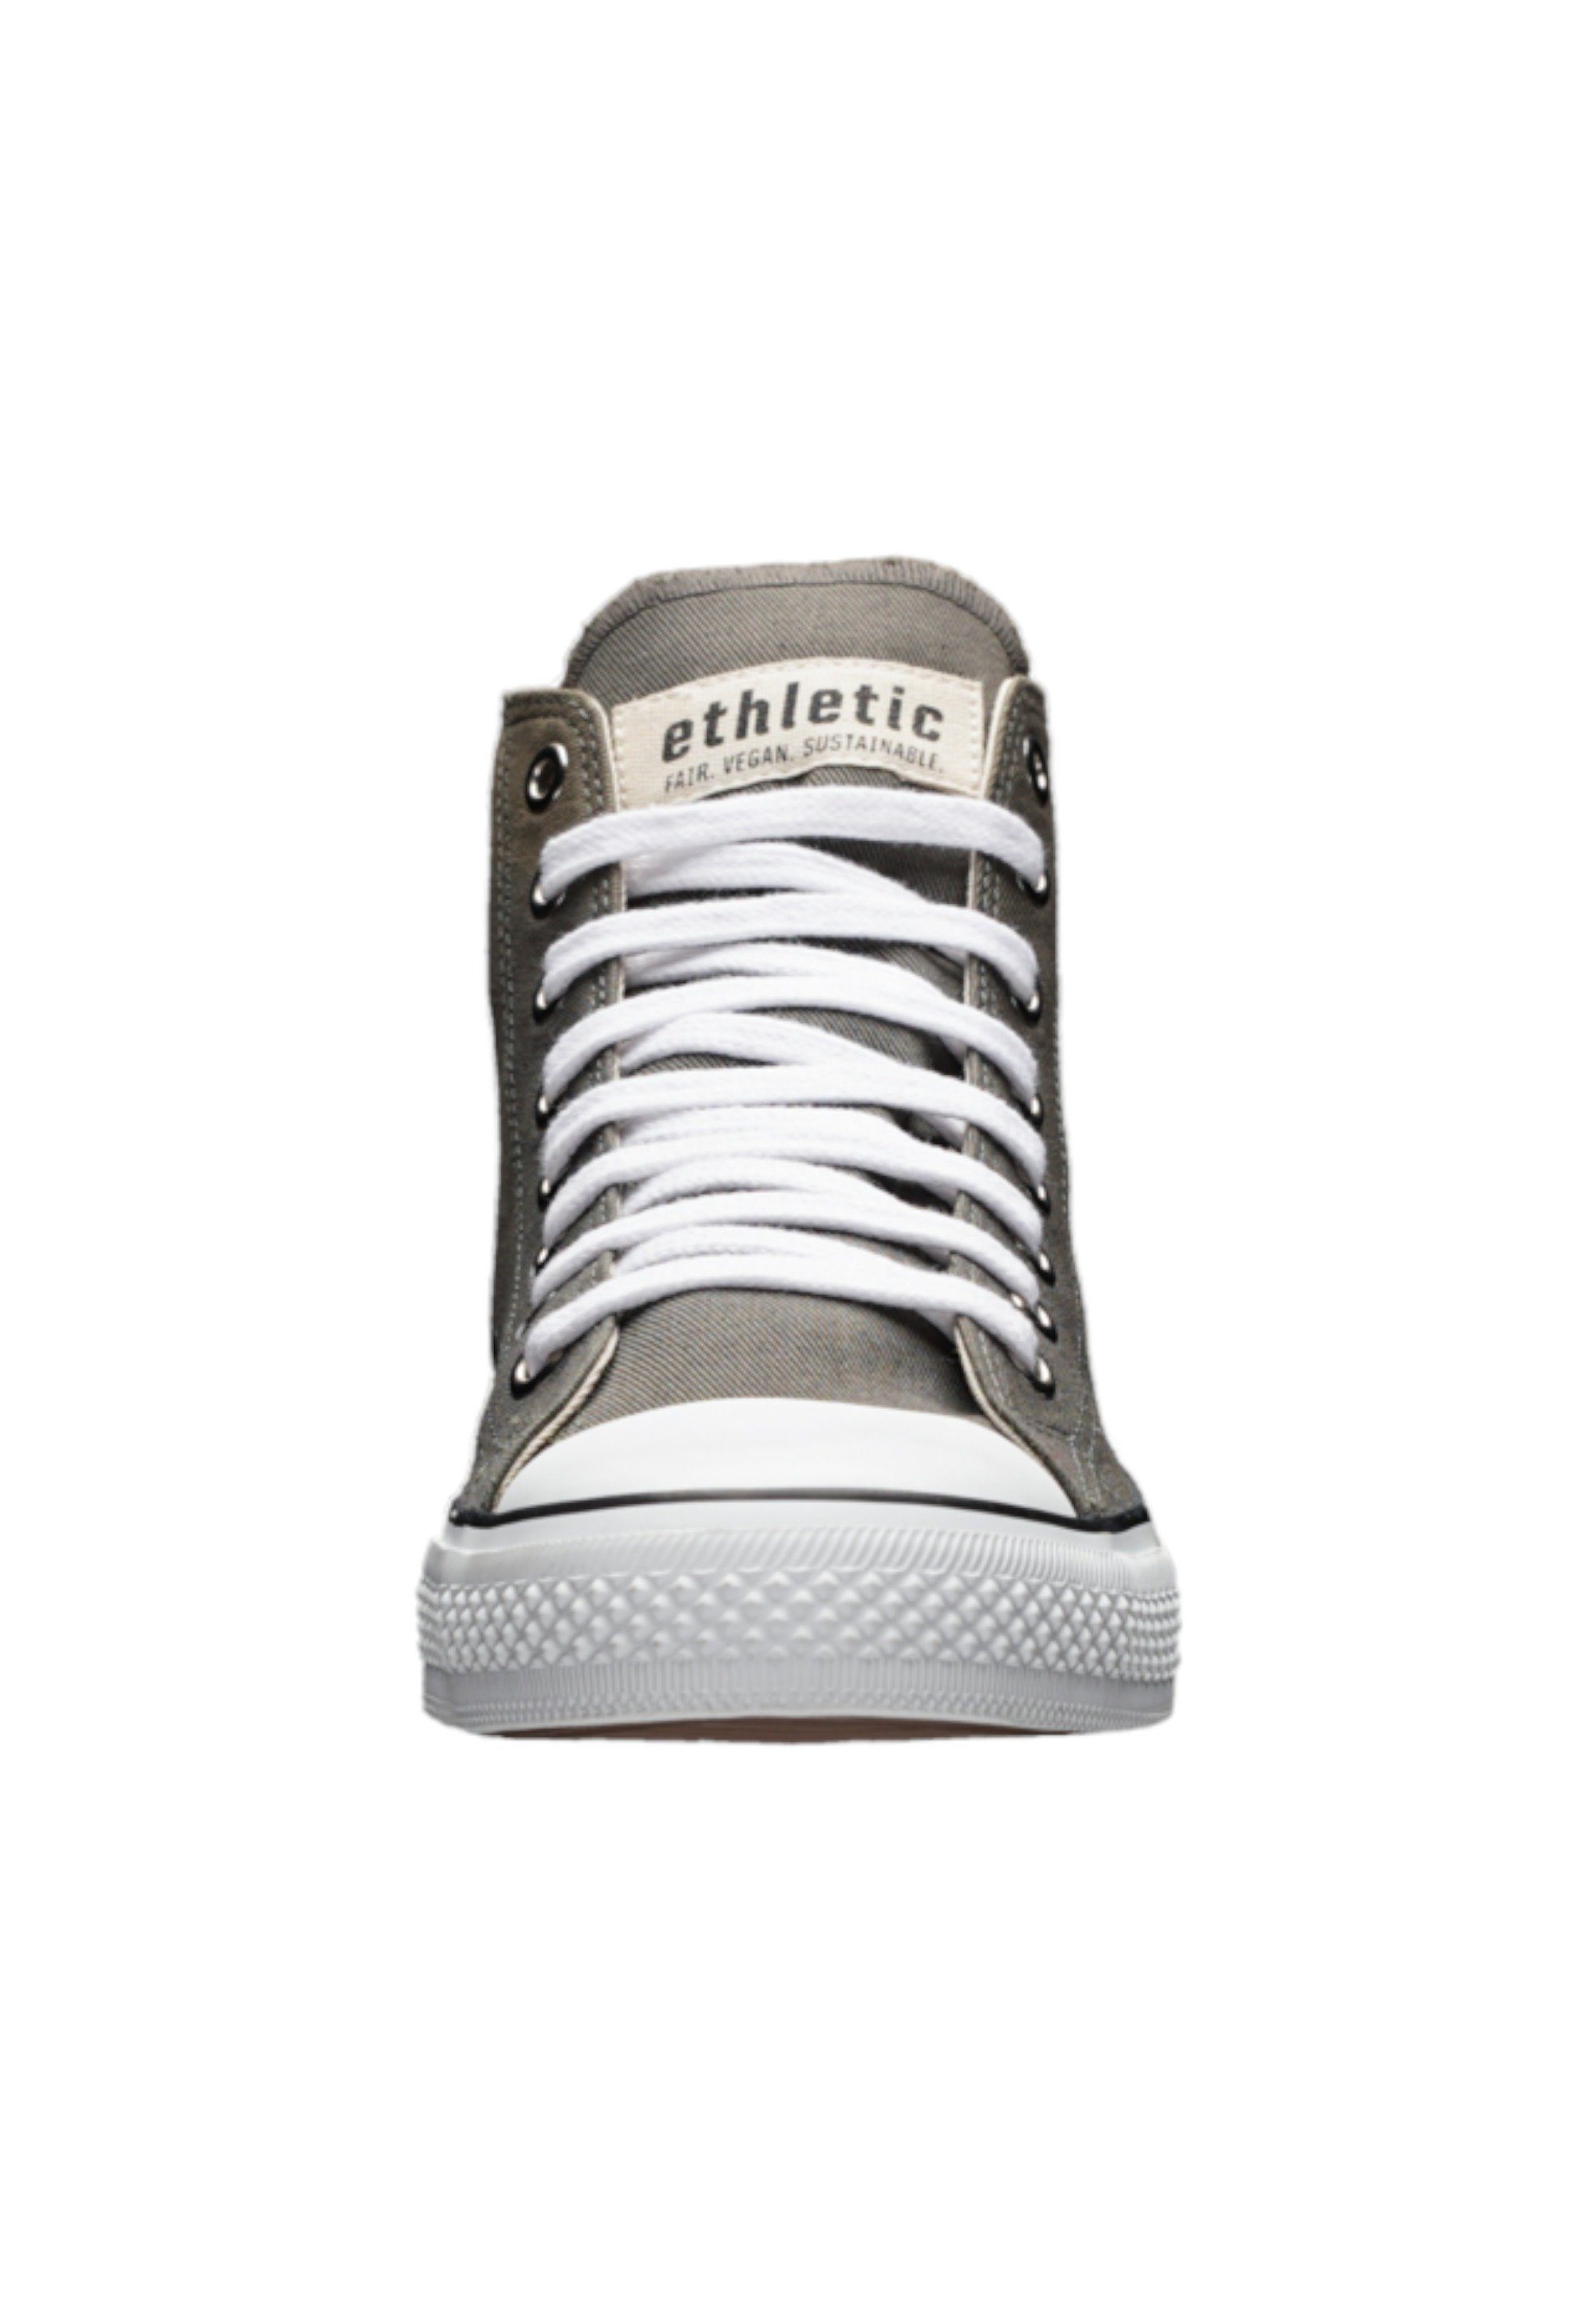 Cap Just Hi Sneaker Fairtrade - Cut ETHLETIC Produkt White Grey White Donkey